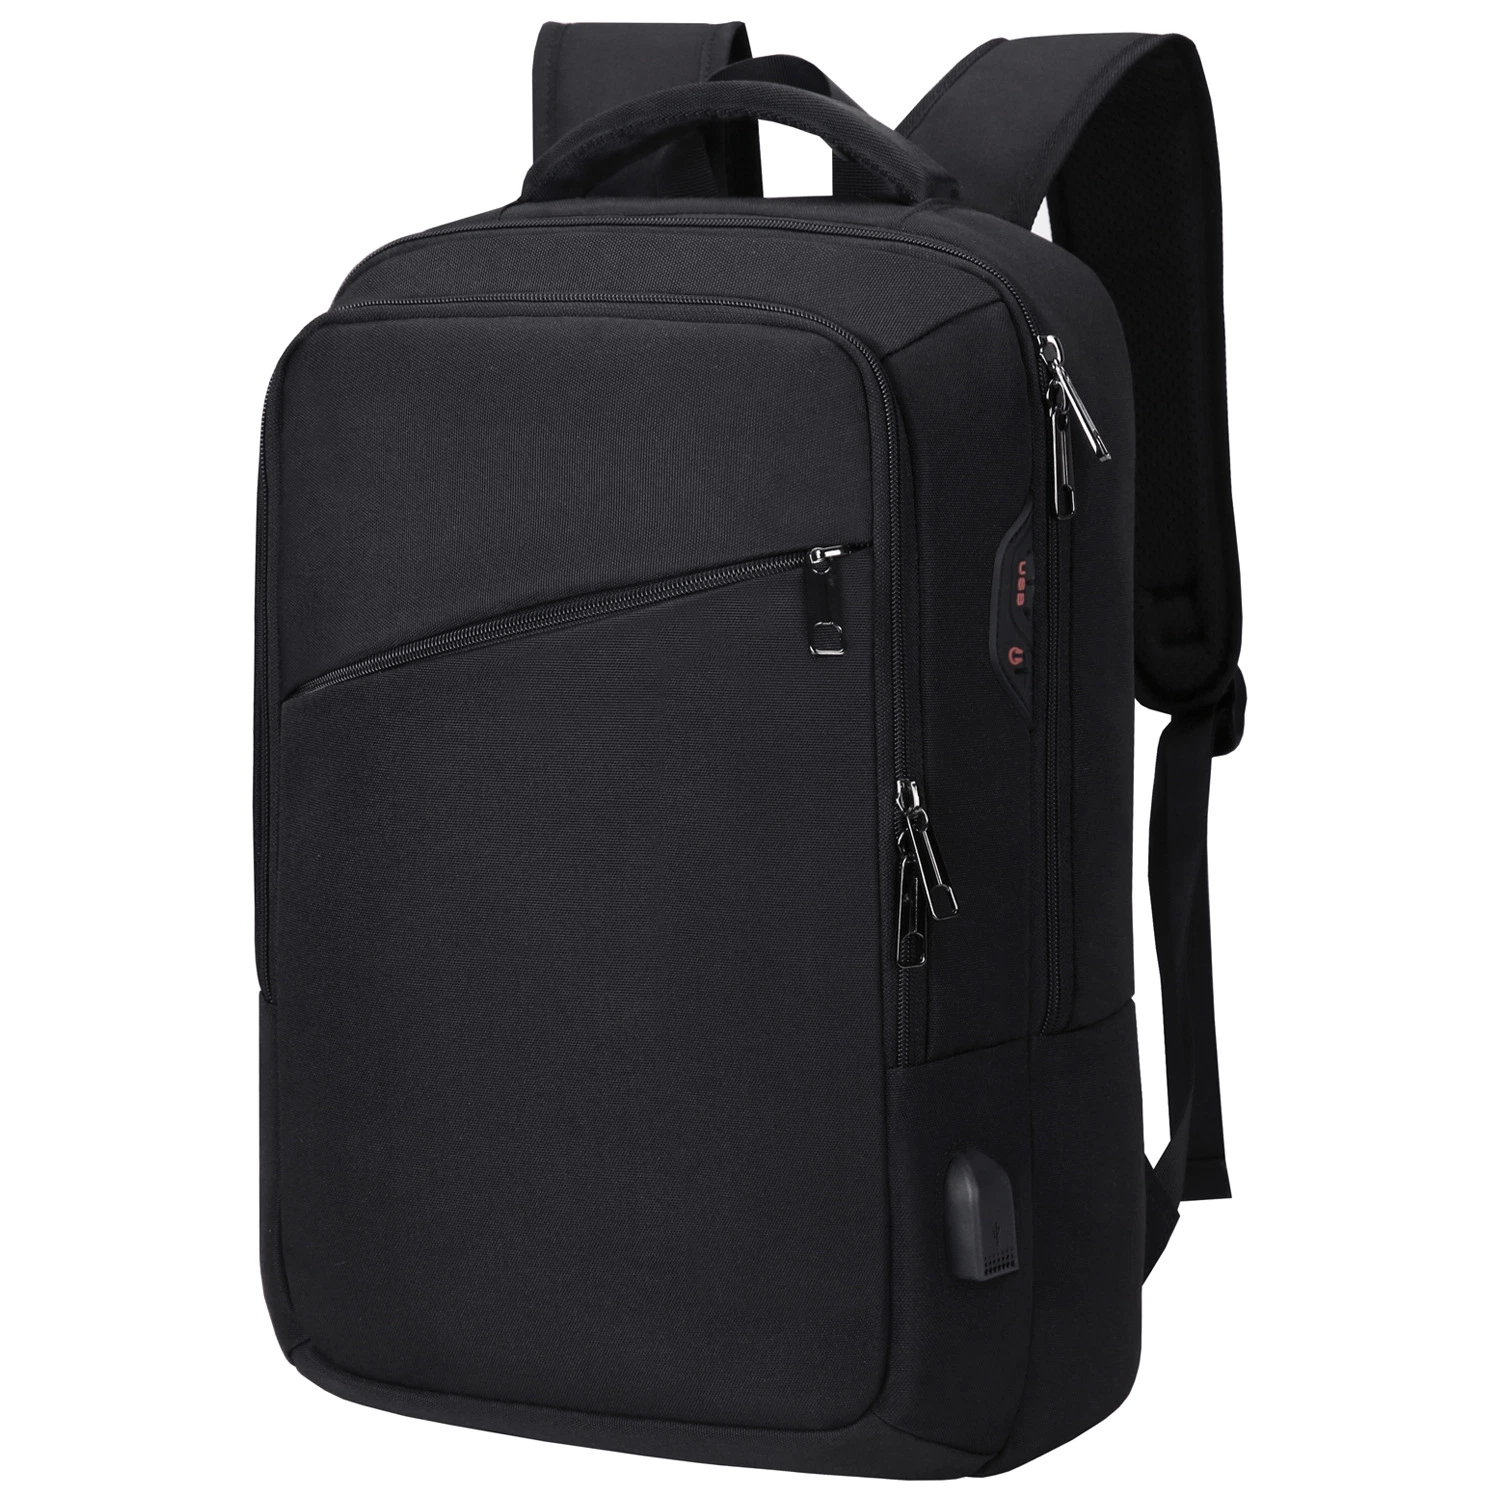 Anti-Theft-Tasche Herren Laptop Rucksack Travel Backpack Damen Große Kapazität Business USB Charge College Student School Schultertaschen